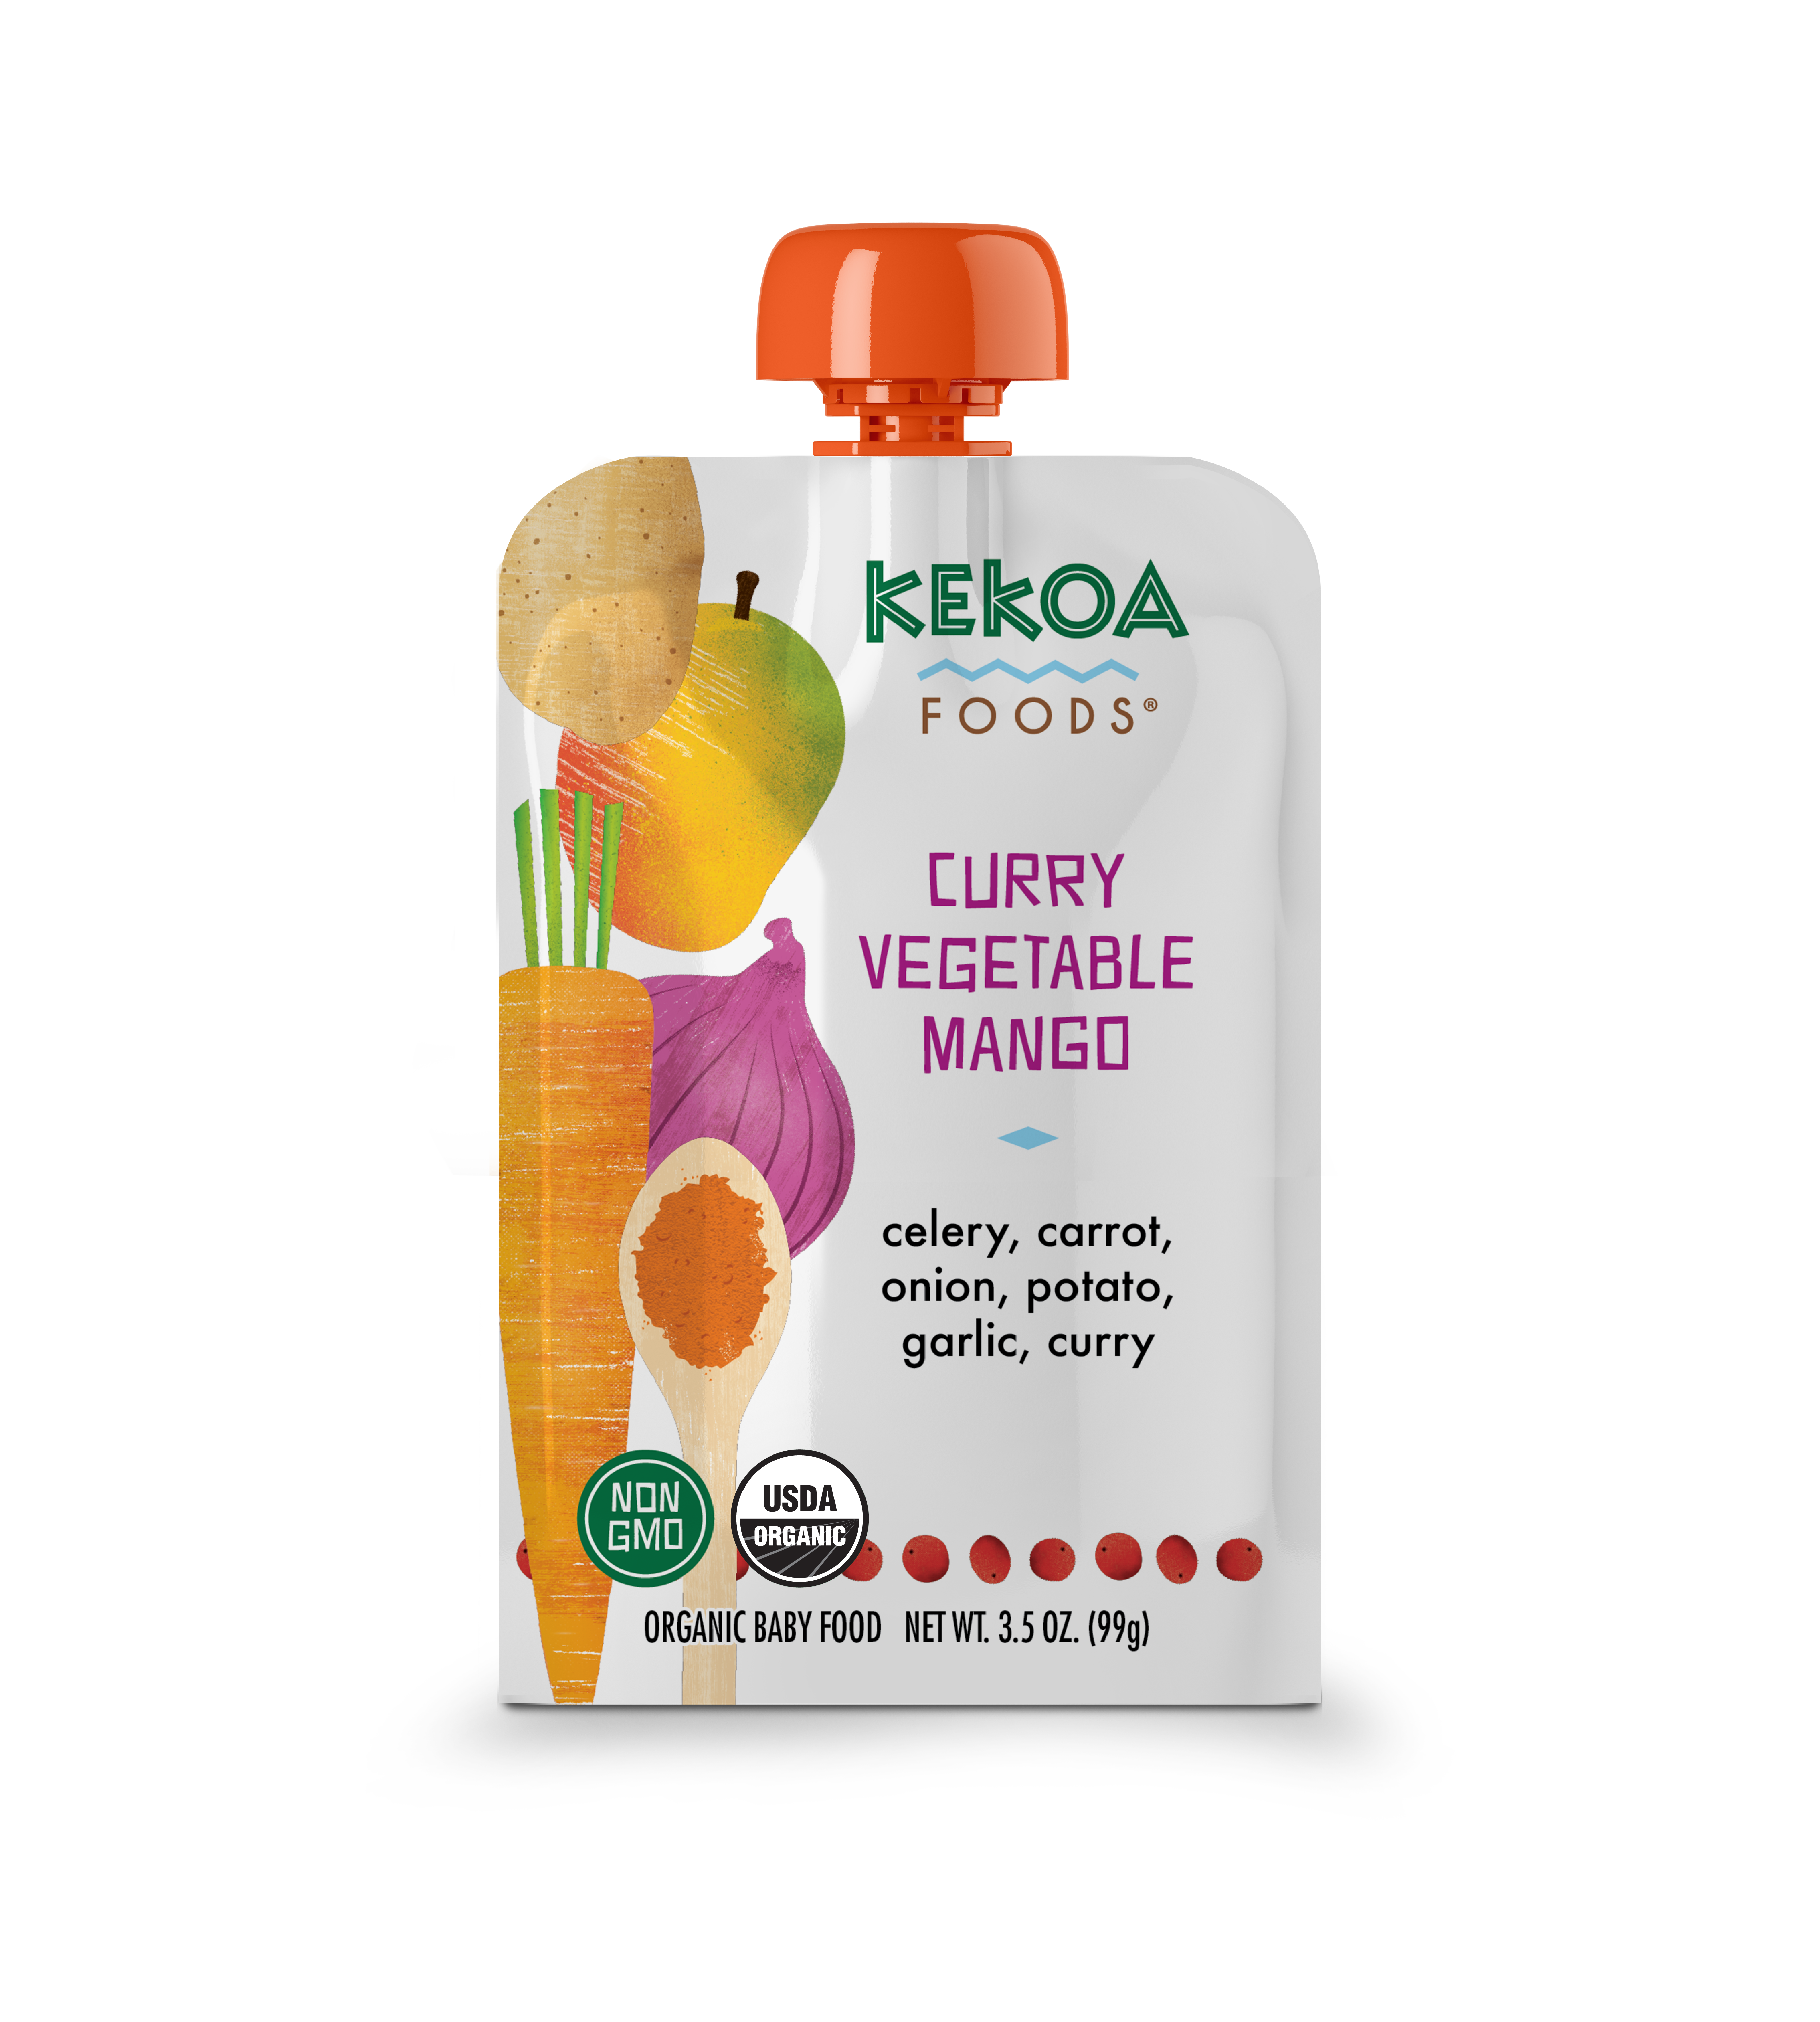 Kekoa Foods - Curry Vegetable Mango 12 innerpacks per case 3.5 oz